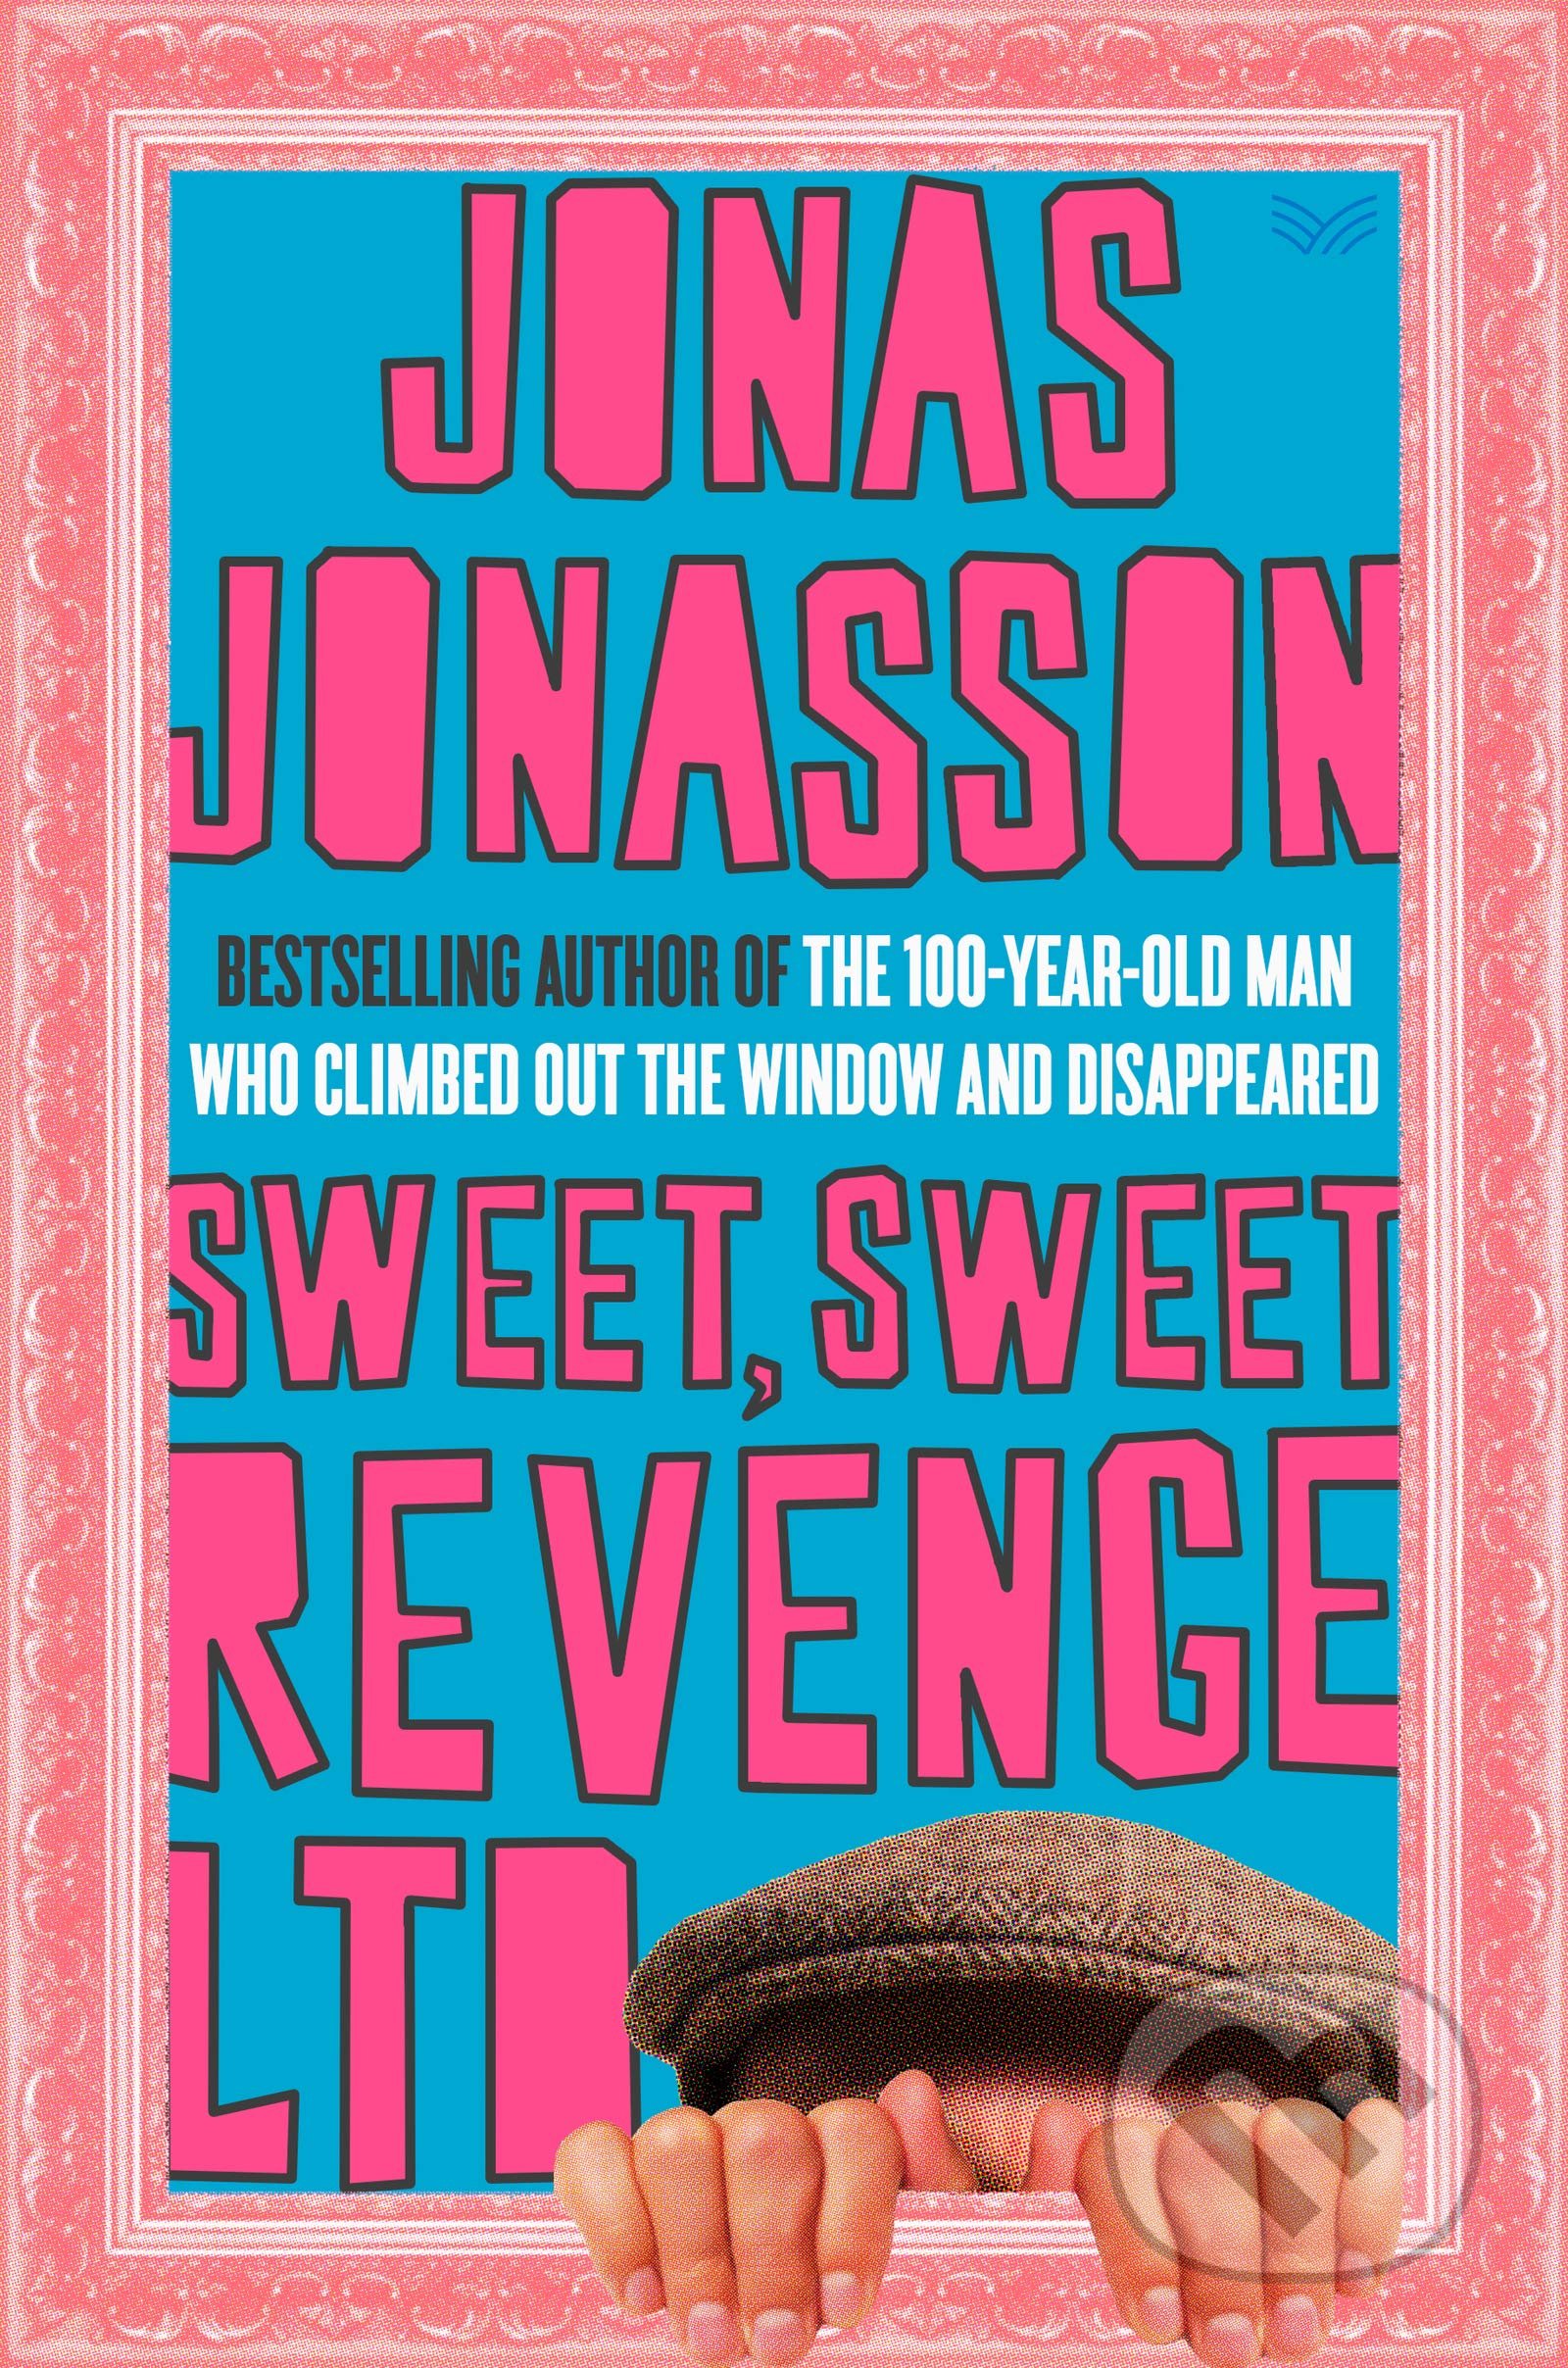 Sweet, Sweet Revenge - Jonas Jonasson, HarperCollins, 2022